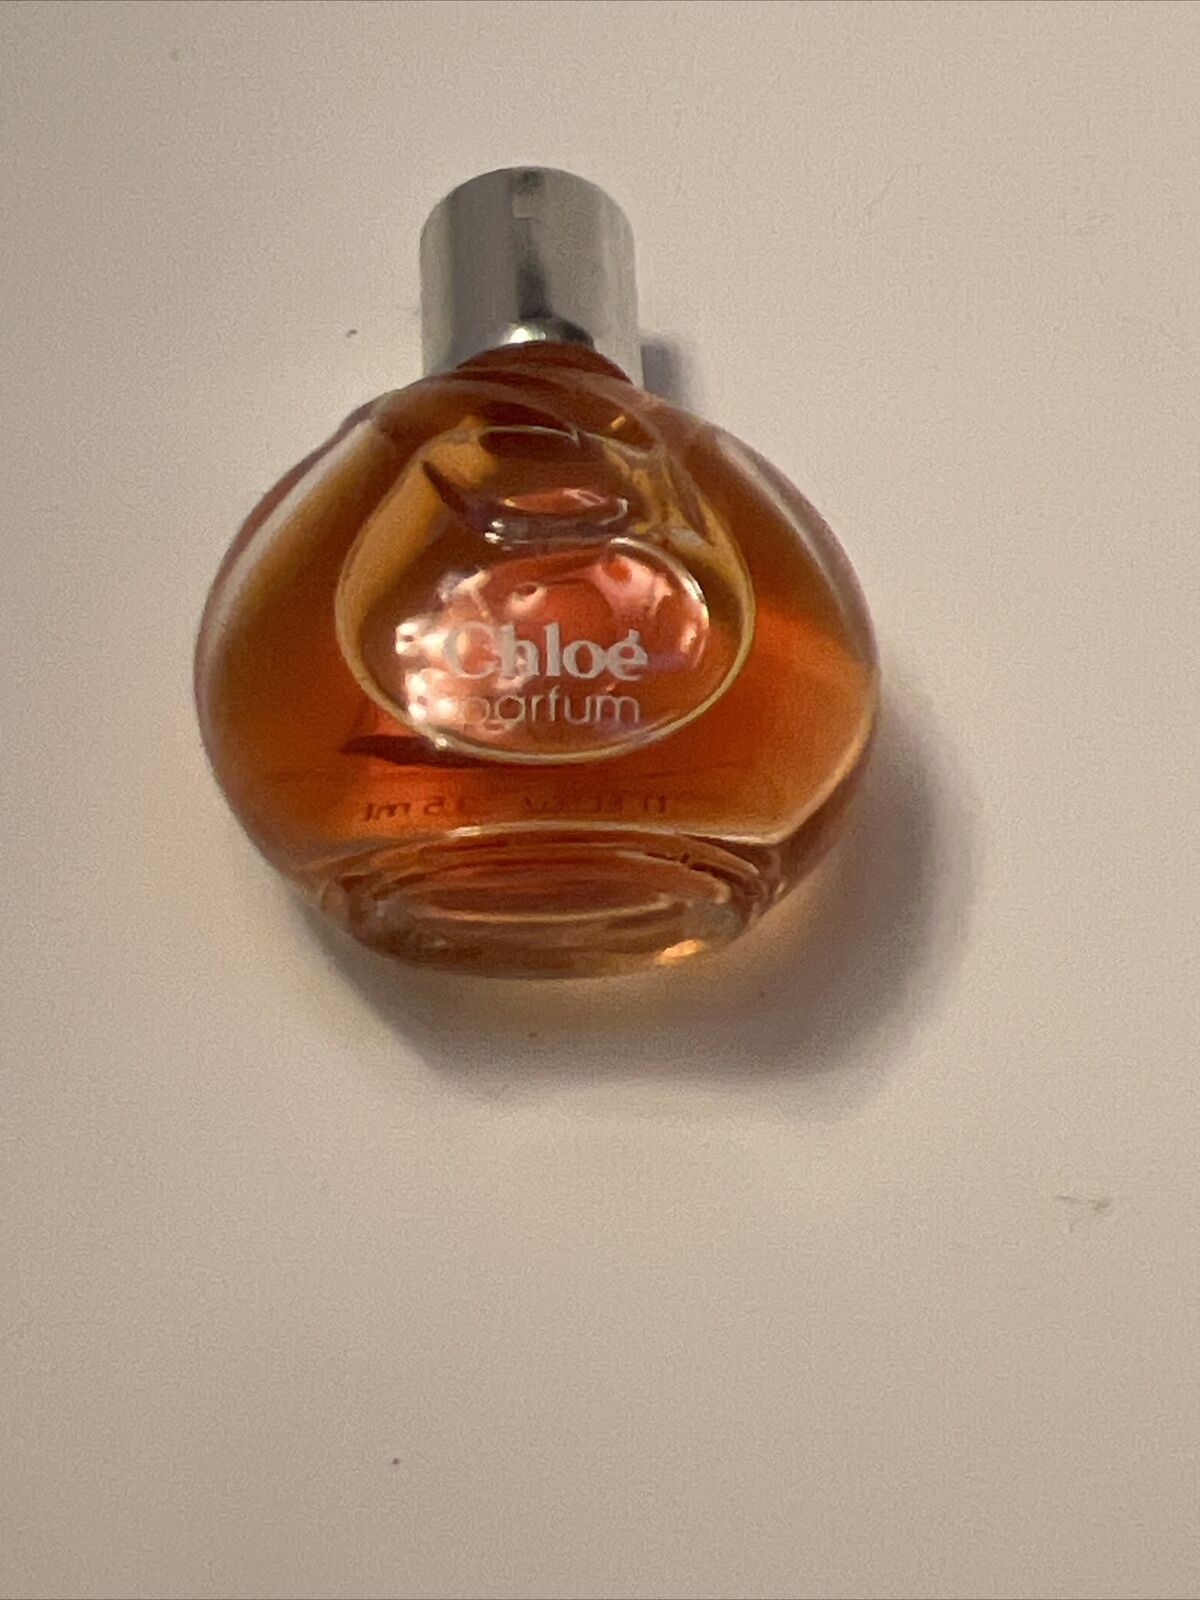 Vintage Mini Bottle of CHLOE Parfum by Lagerfeld .11 fl.oz / 3.5 mL Miniature